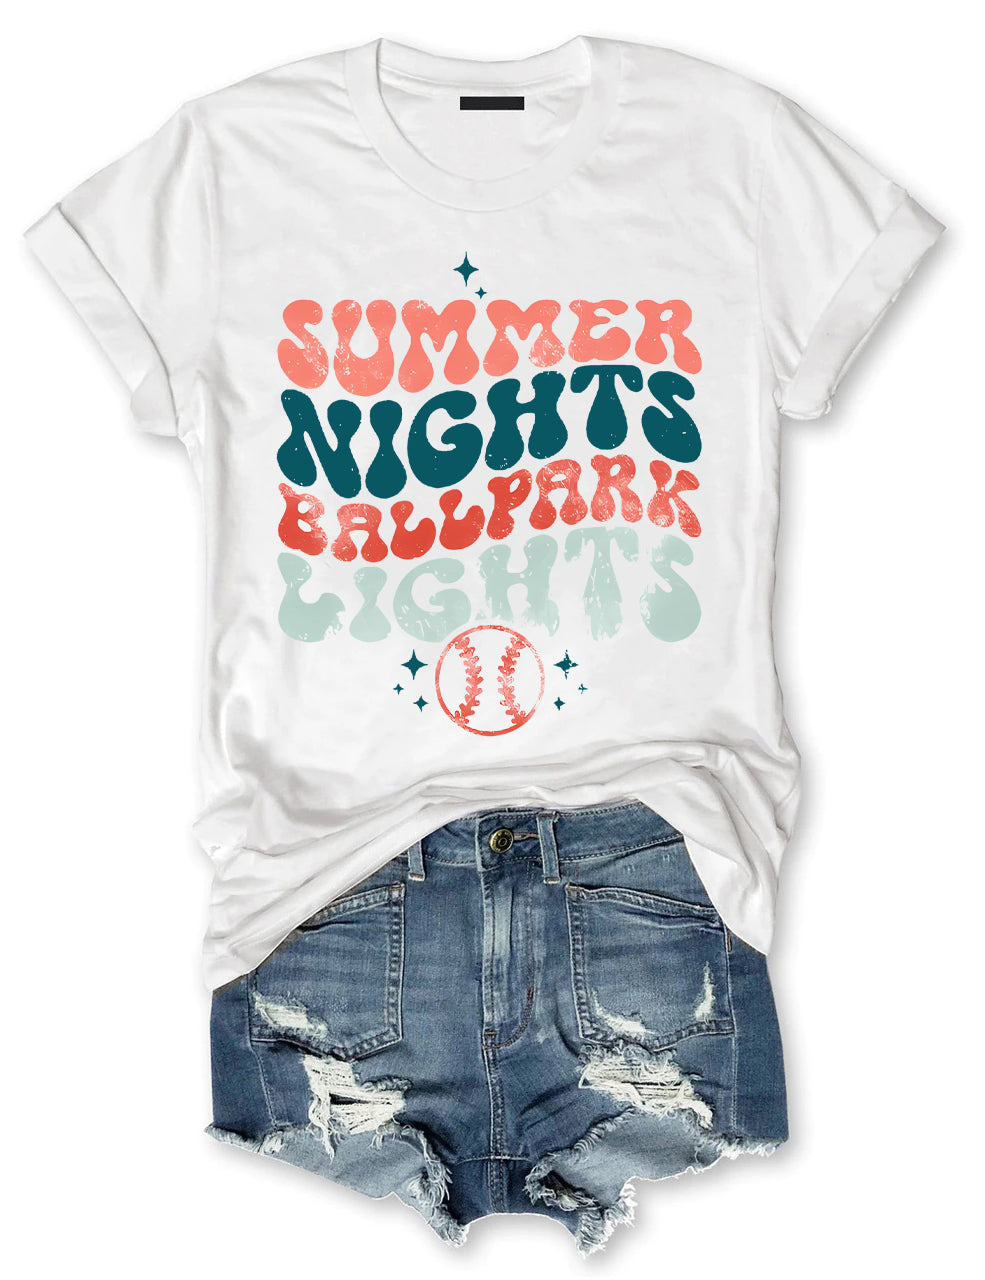 Summer Nights Ballpark Lights Baseball T-shirt